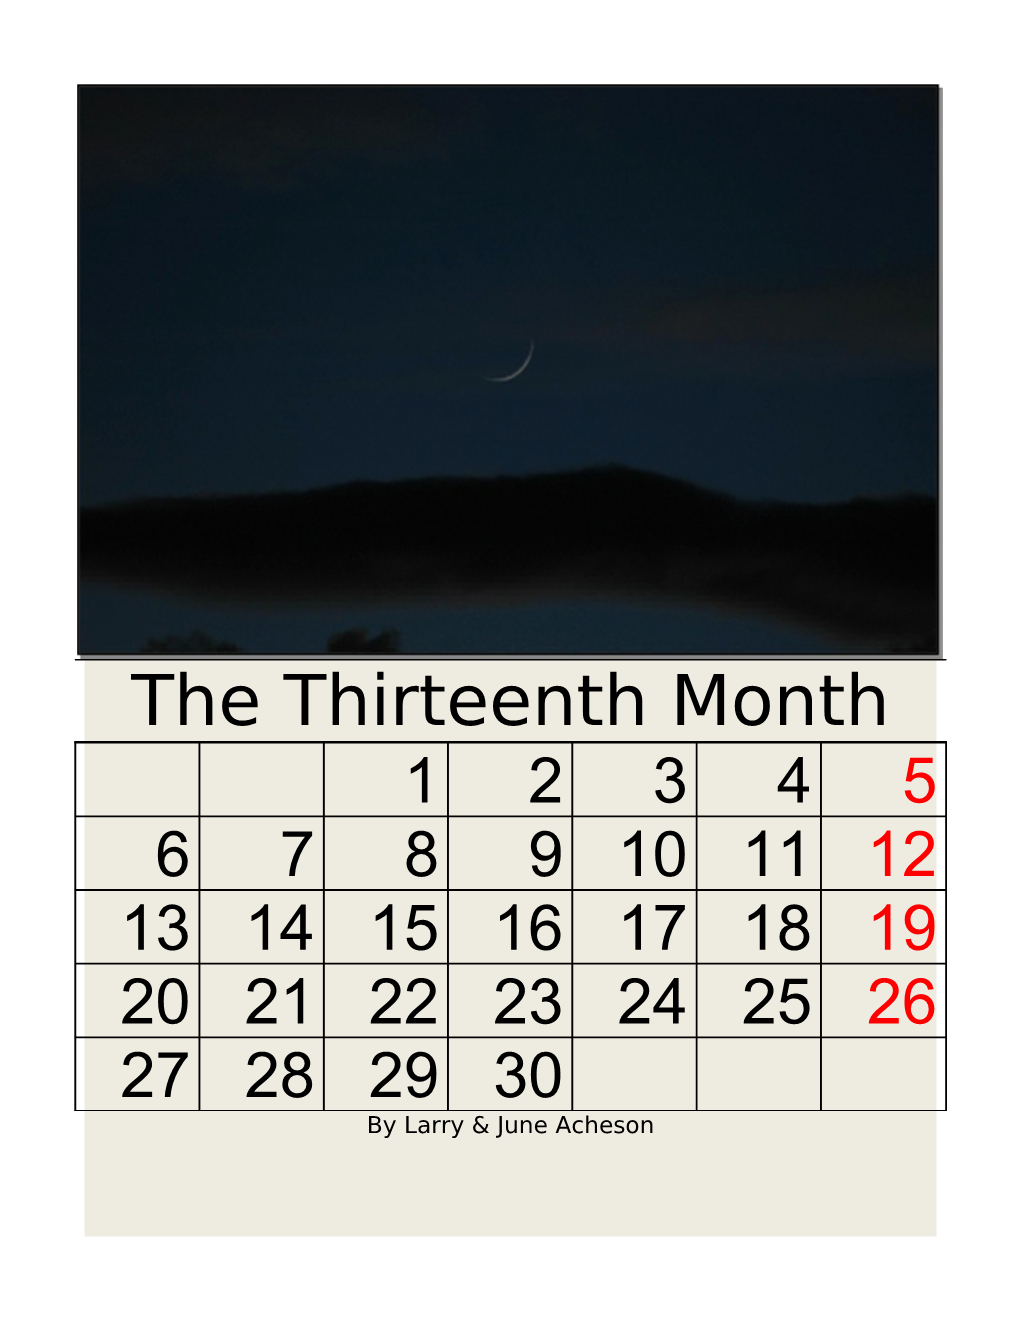 The Thirteenth Month